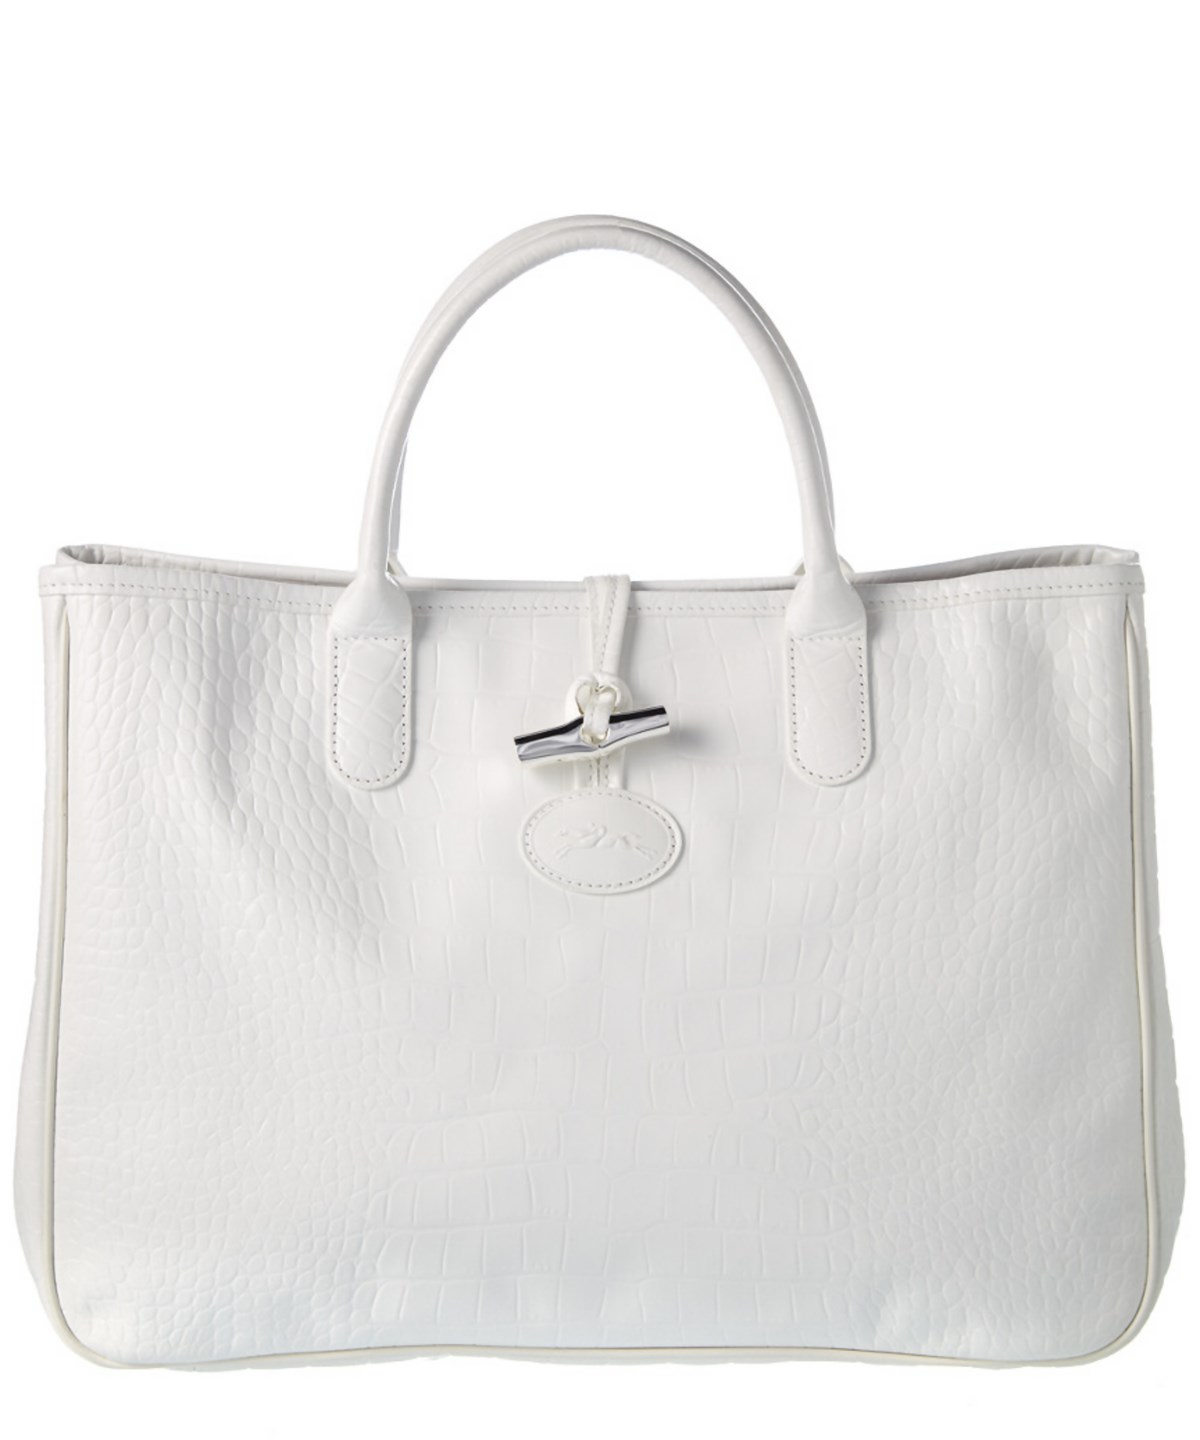 longchamp white leather bag